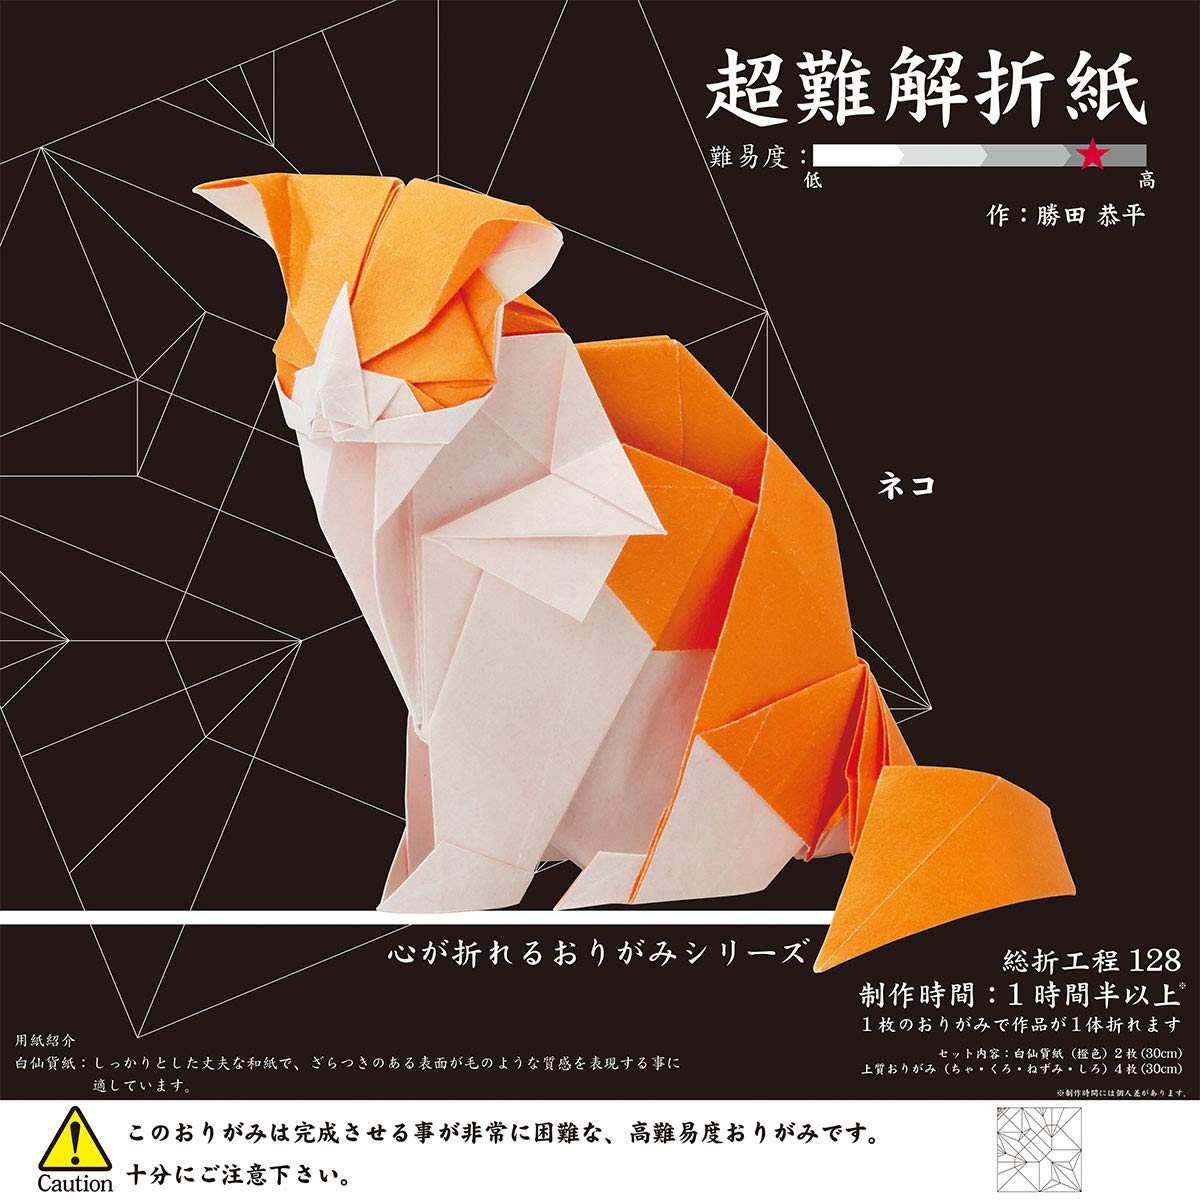 Super Difficult Origami Serie - Cat by Kyohei Katsuta + 6 sheets 30x30 cm (12''x12'')